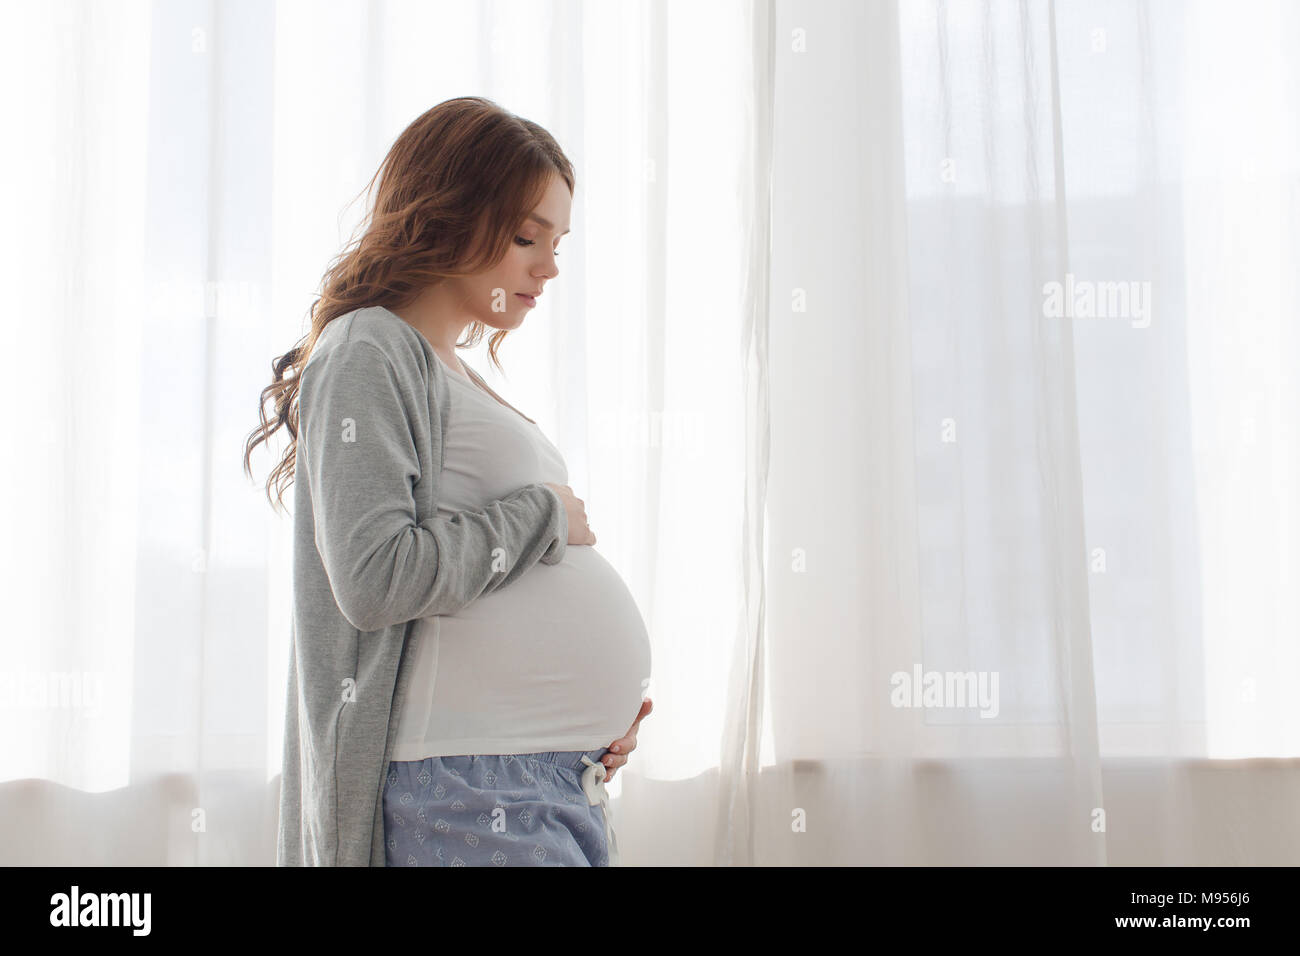 Schwangeren Bauch zu berühren Stockfoto